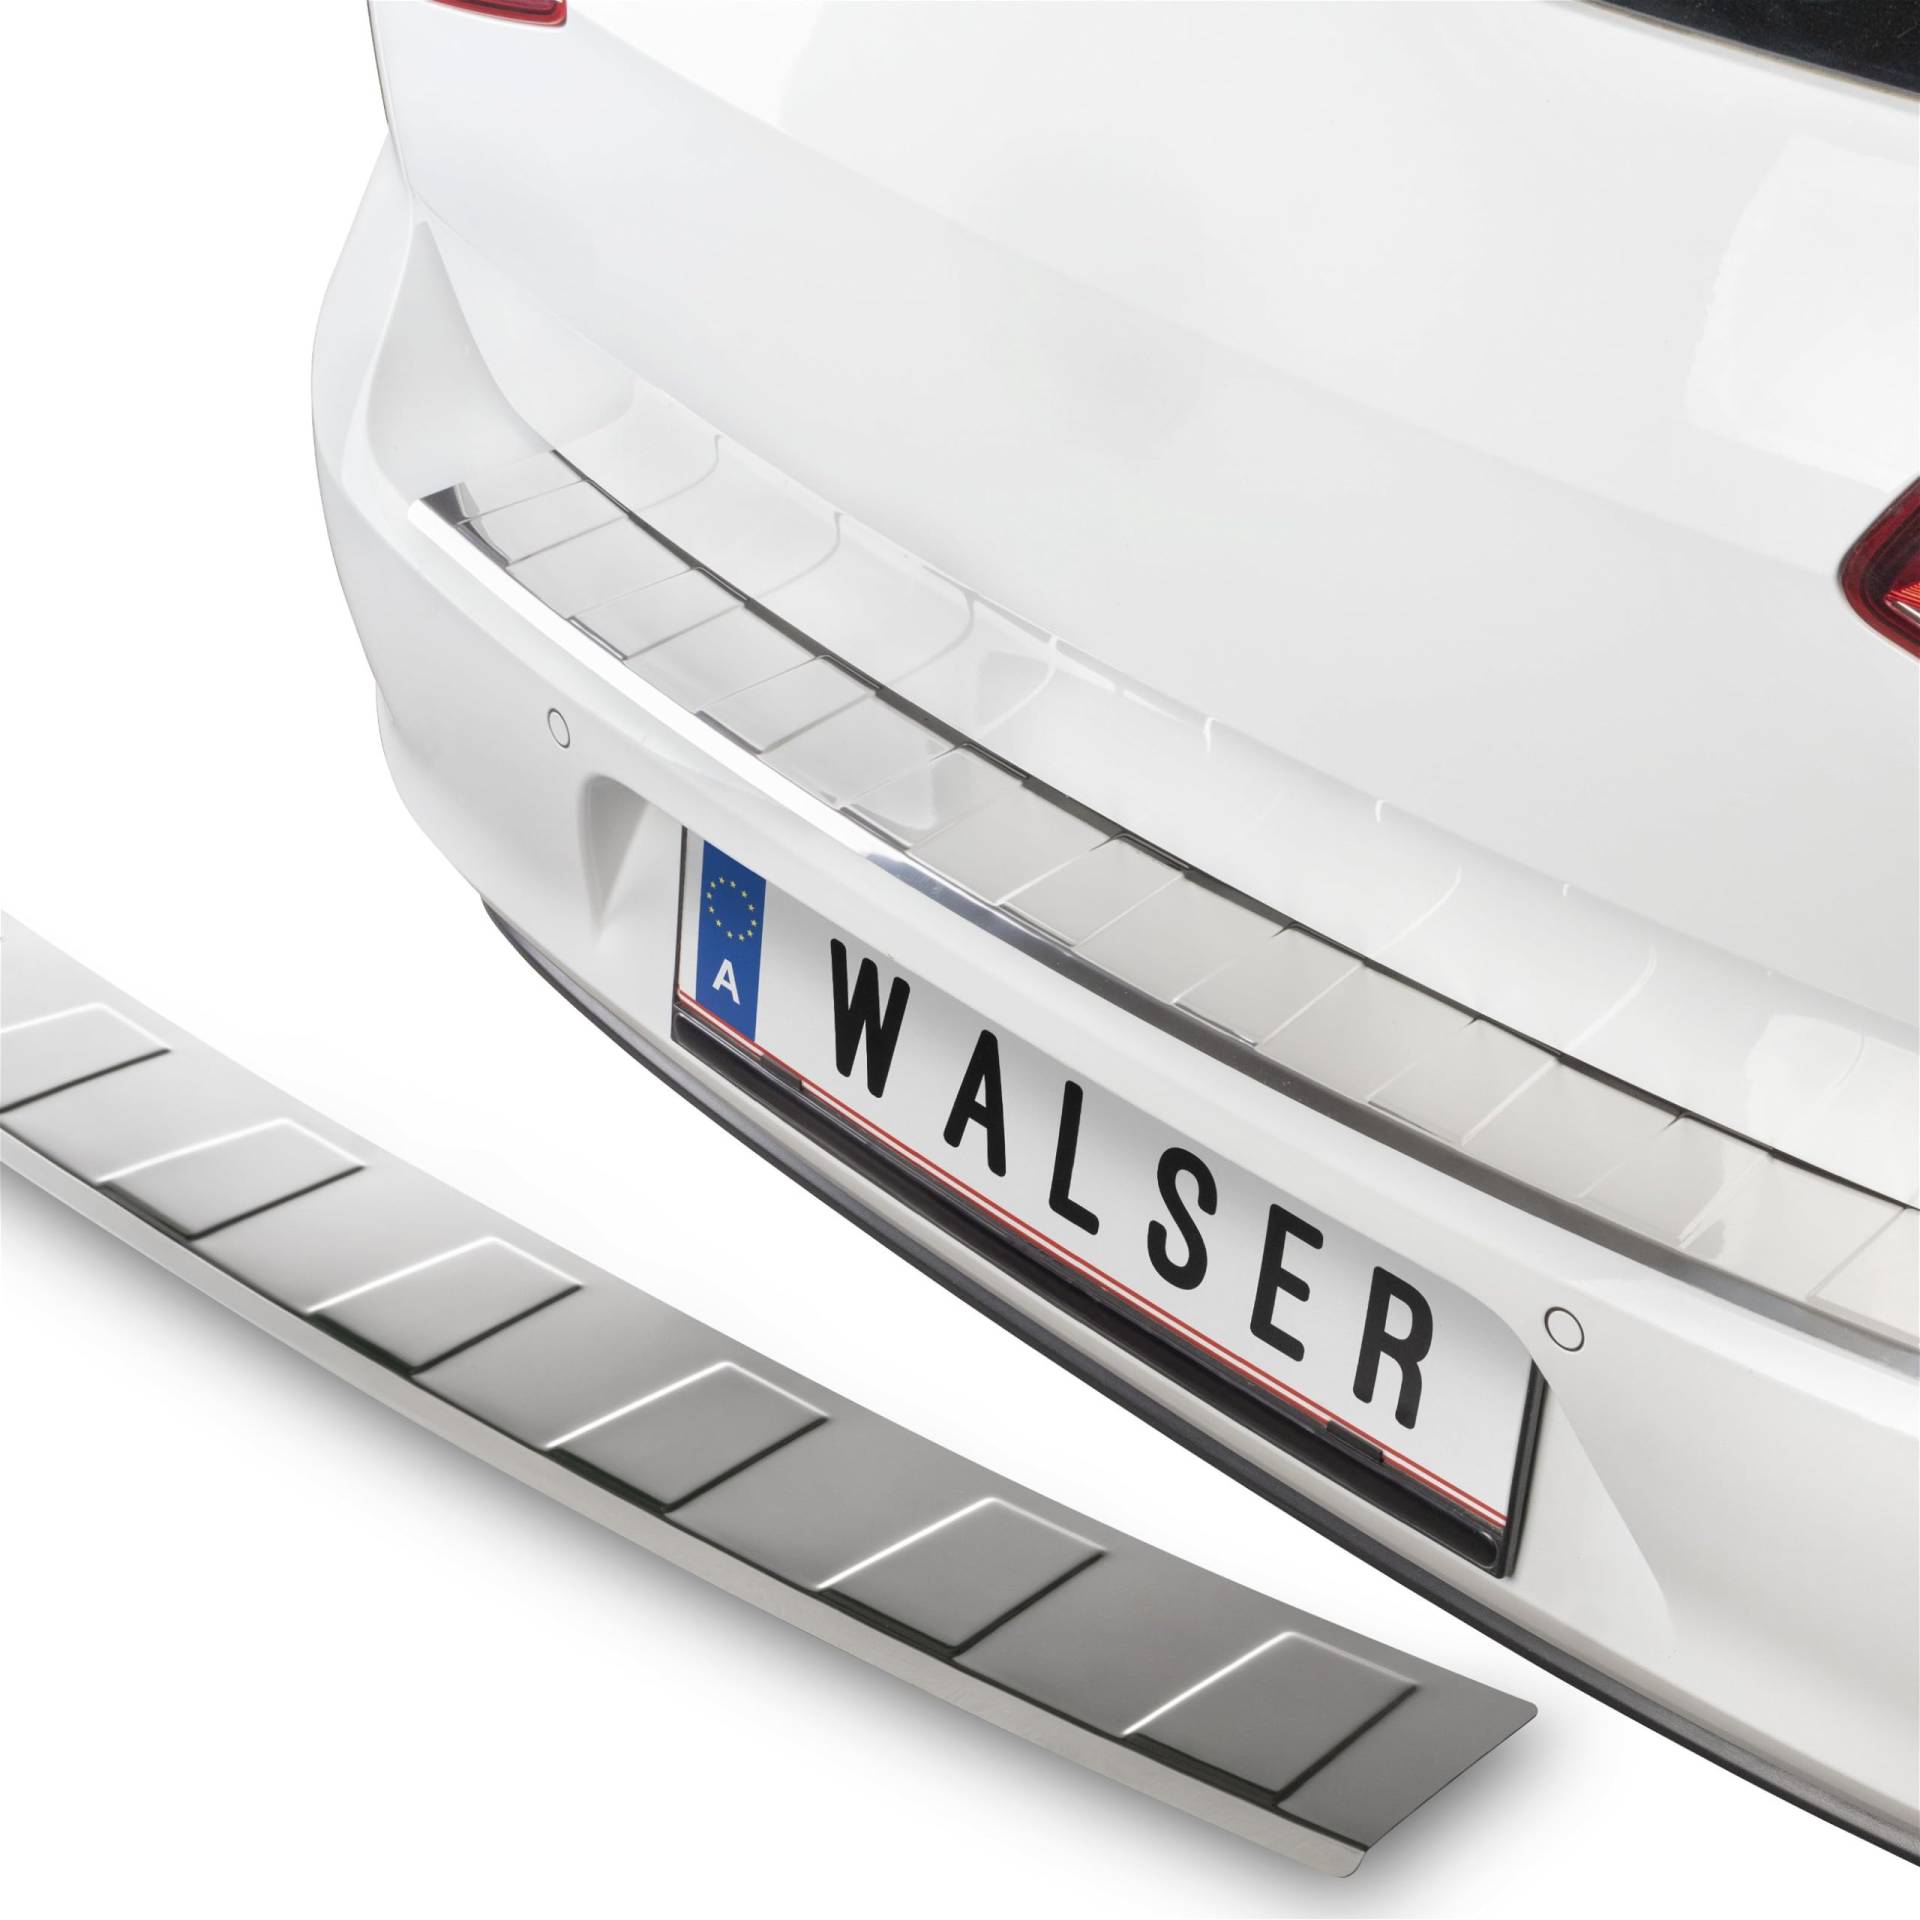 Walser Premium Ladekantenschutz kompatibel mit Mercedes-Benz GLC (X253) 06/2015-2019, 100% maßgeschneiderter Kantenschutz Edelstahl Proguard, Kofferraum Stoßstangenschutz Auto Made in Europa Silber von Walser